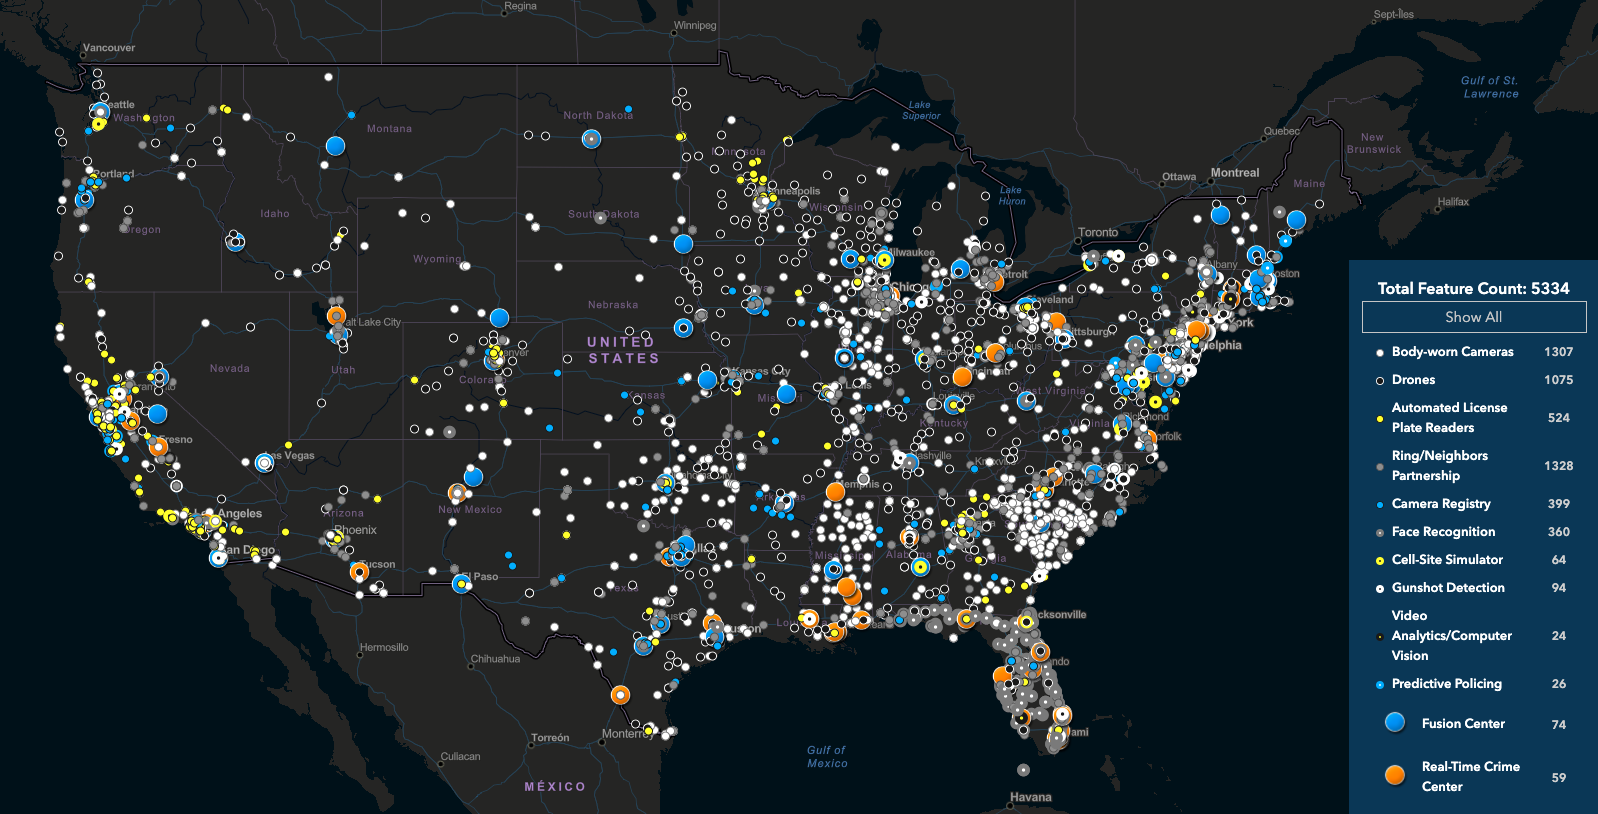 Atlas of police surveillance technologies.